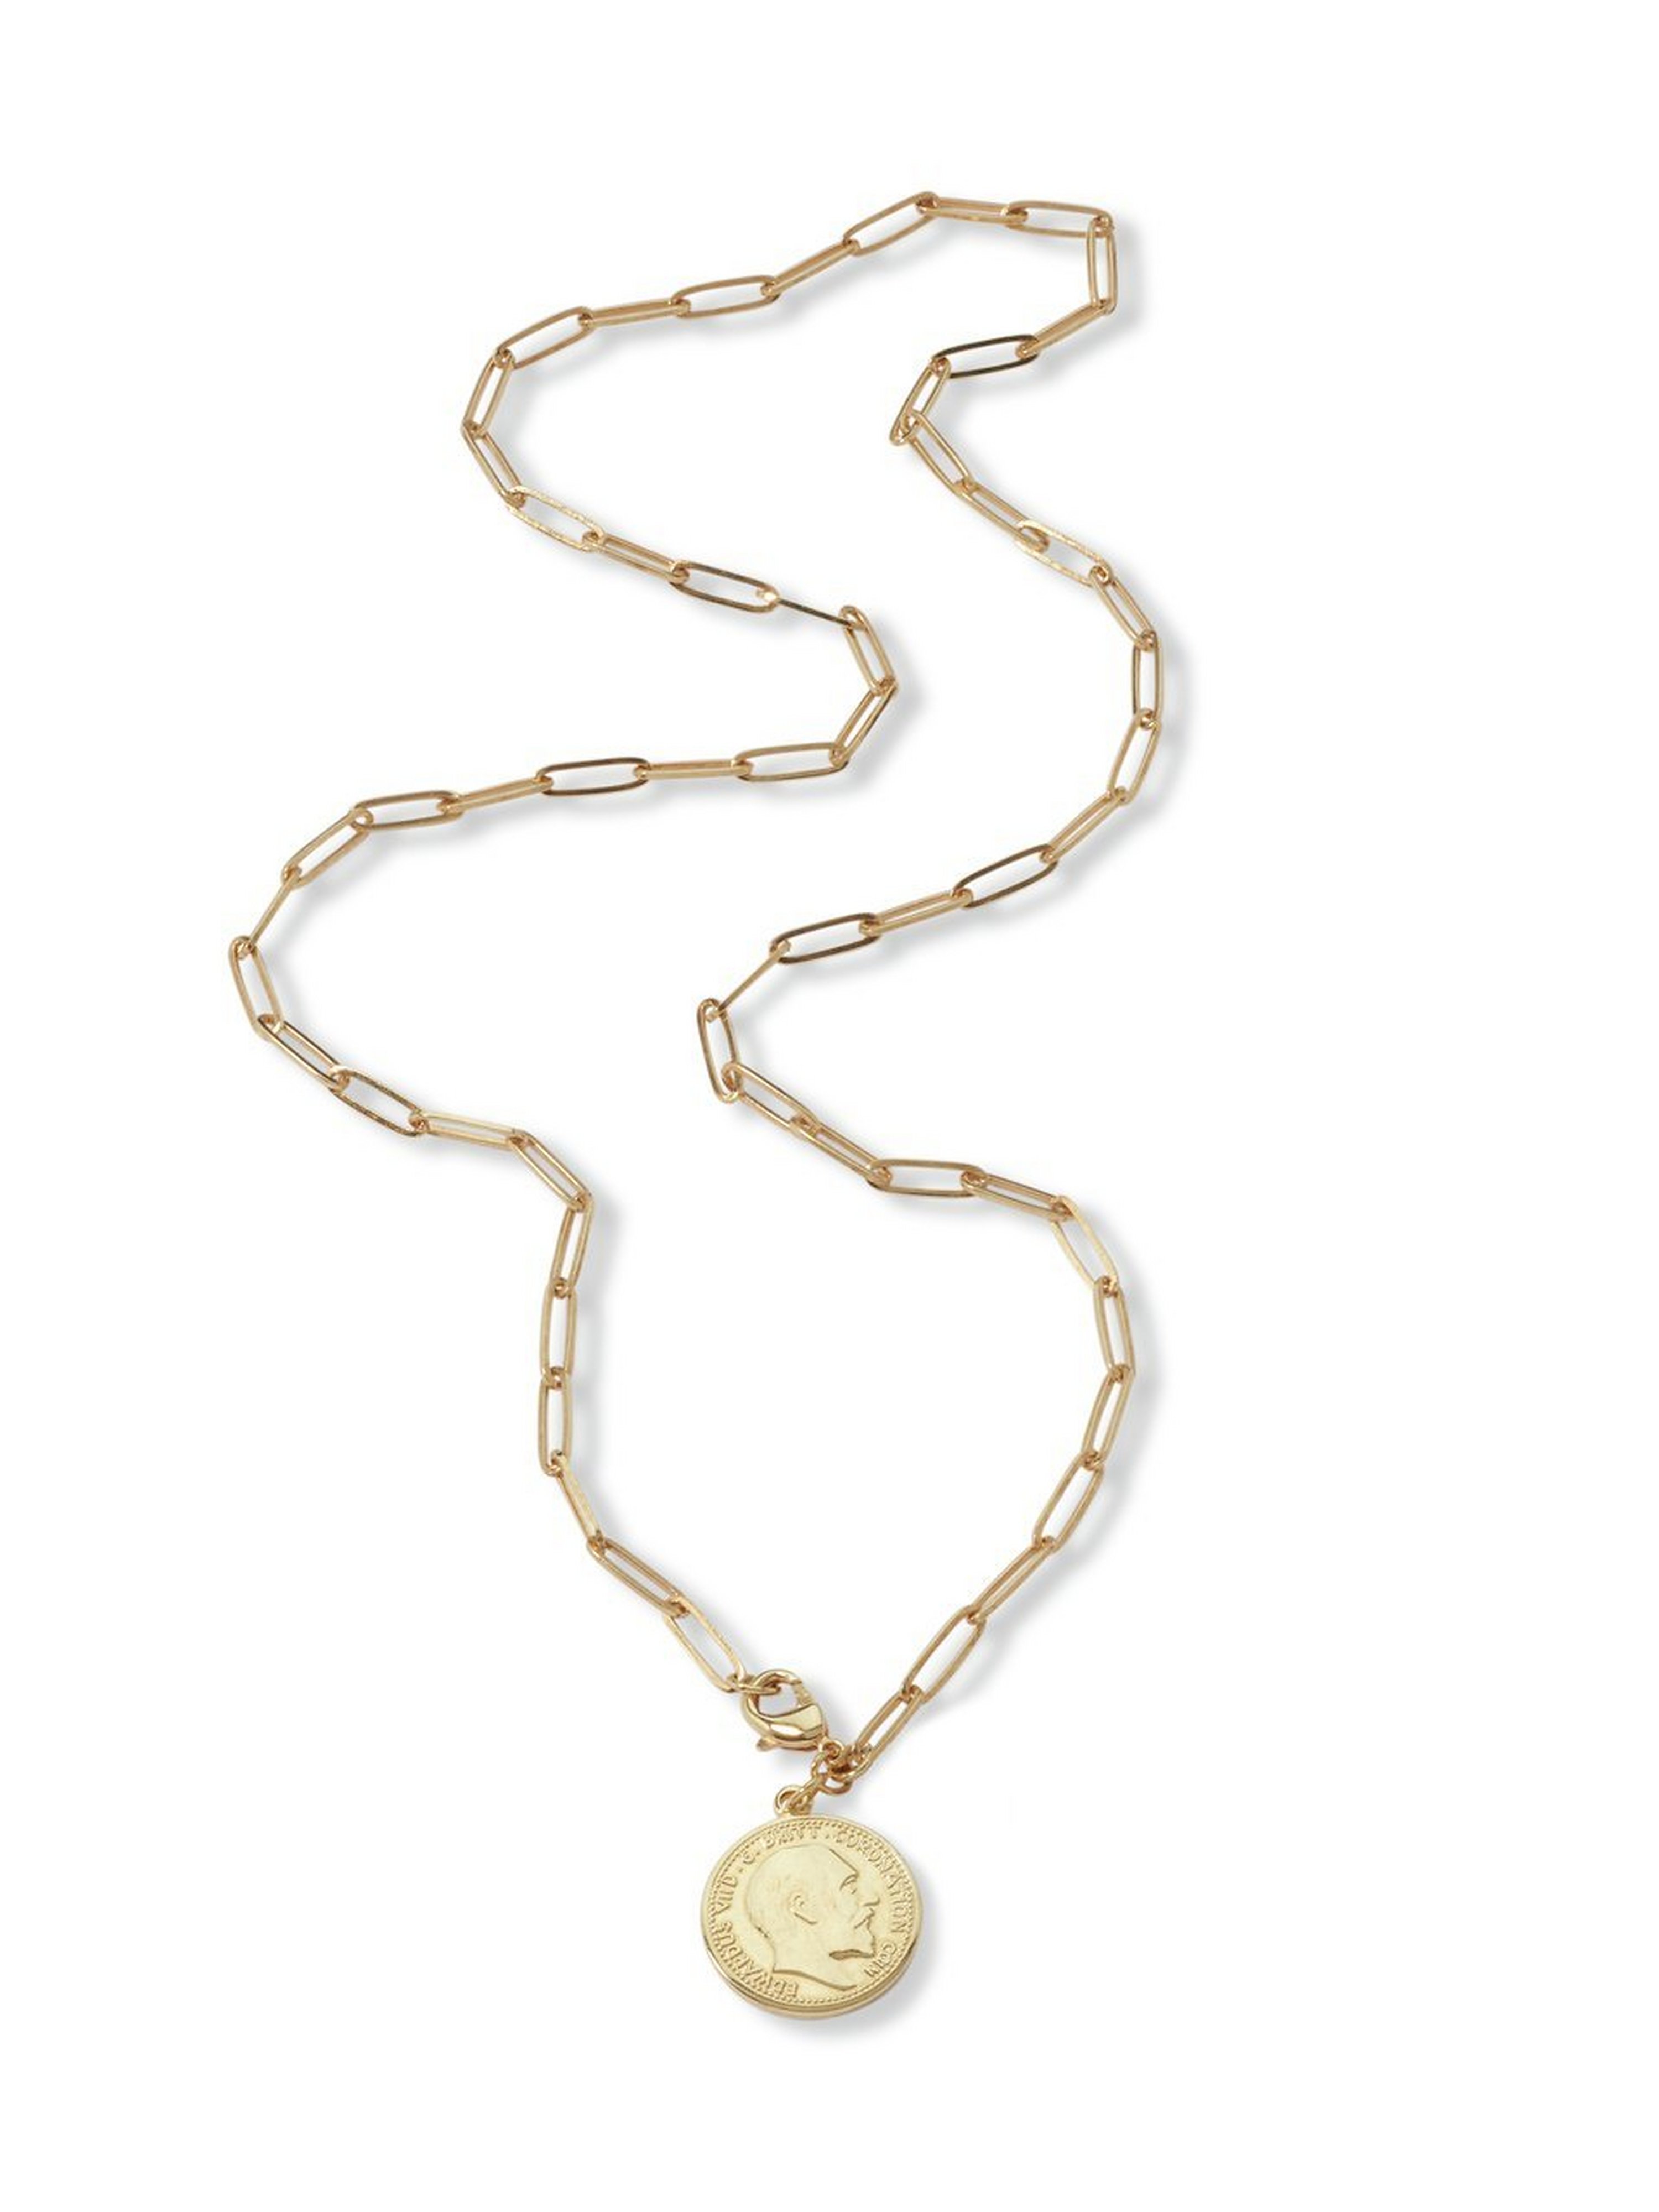 Necklace chain links Uta Raasch gold